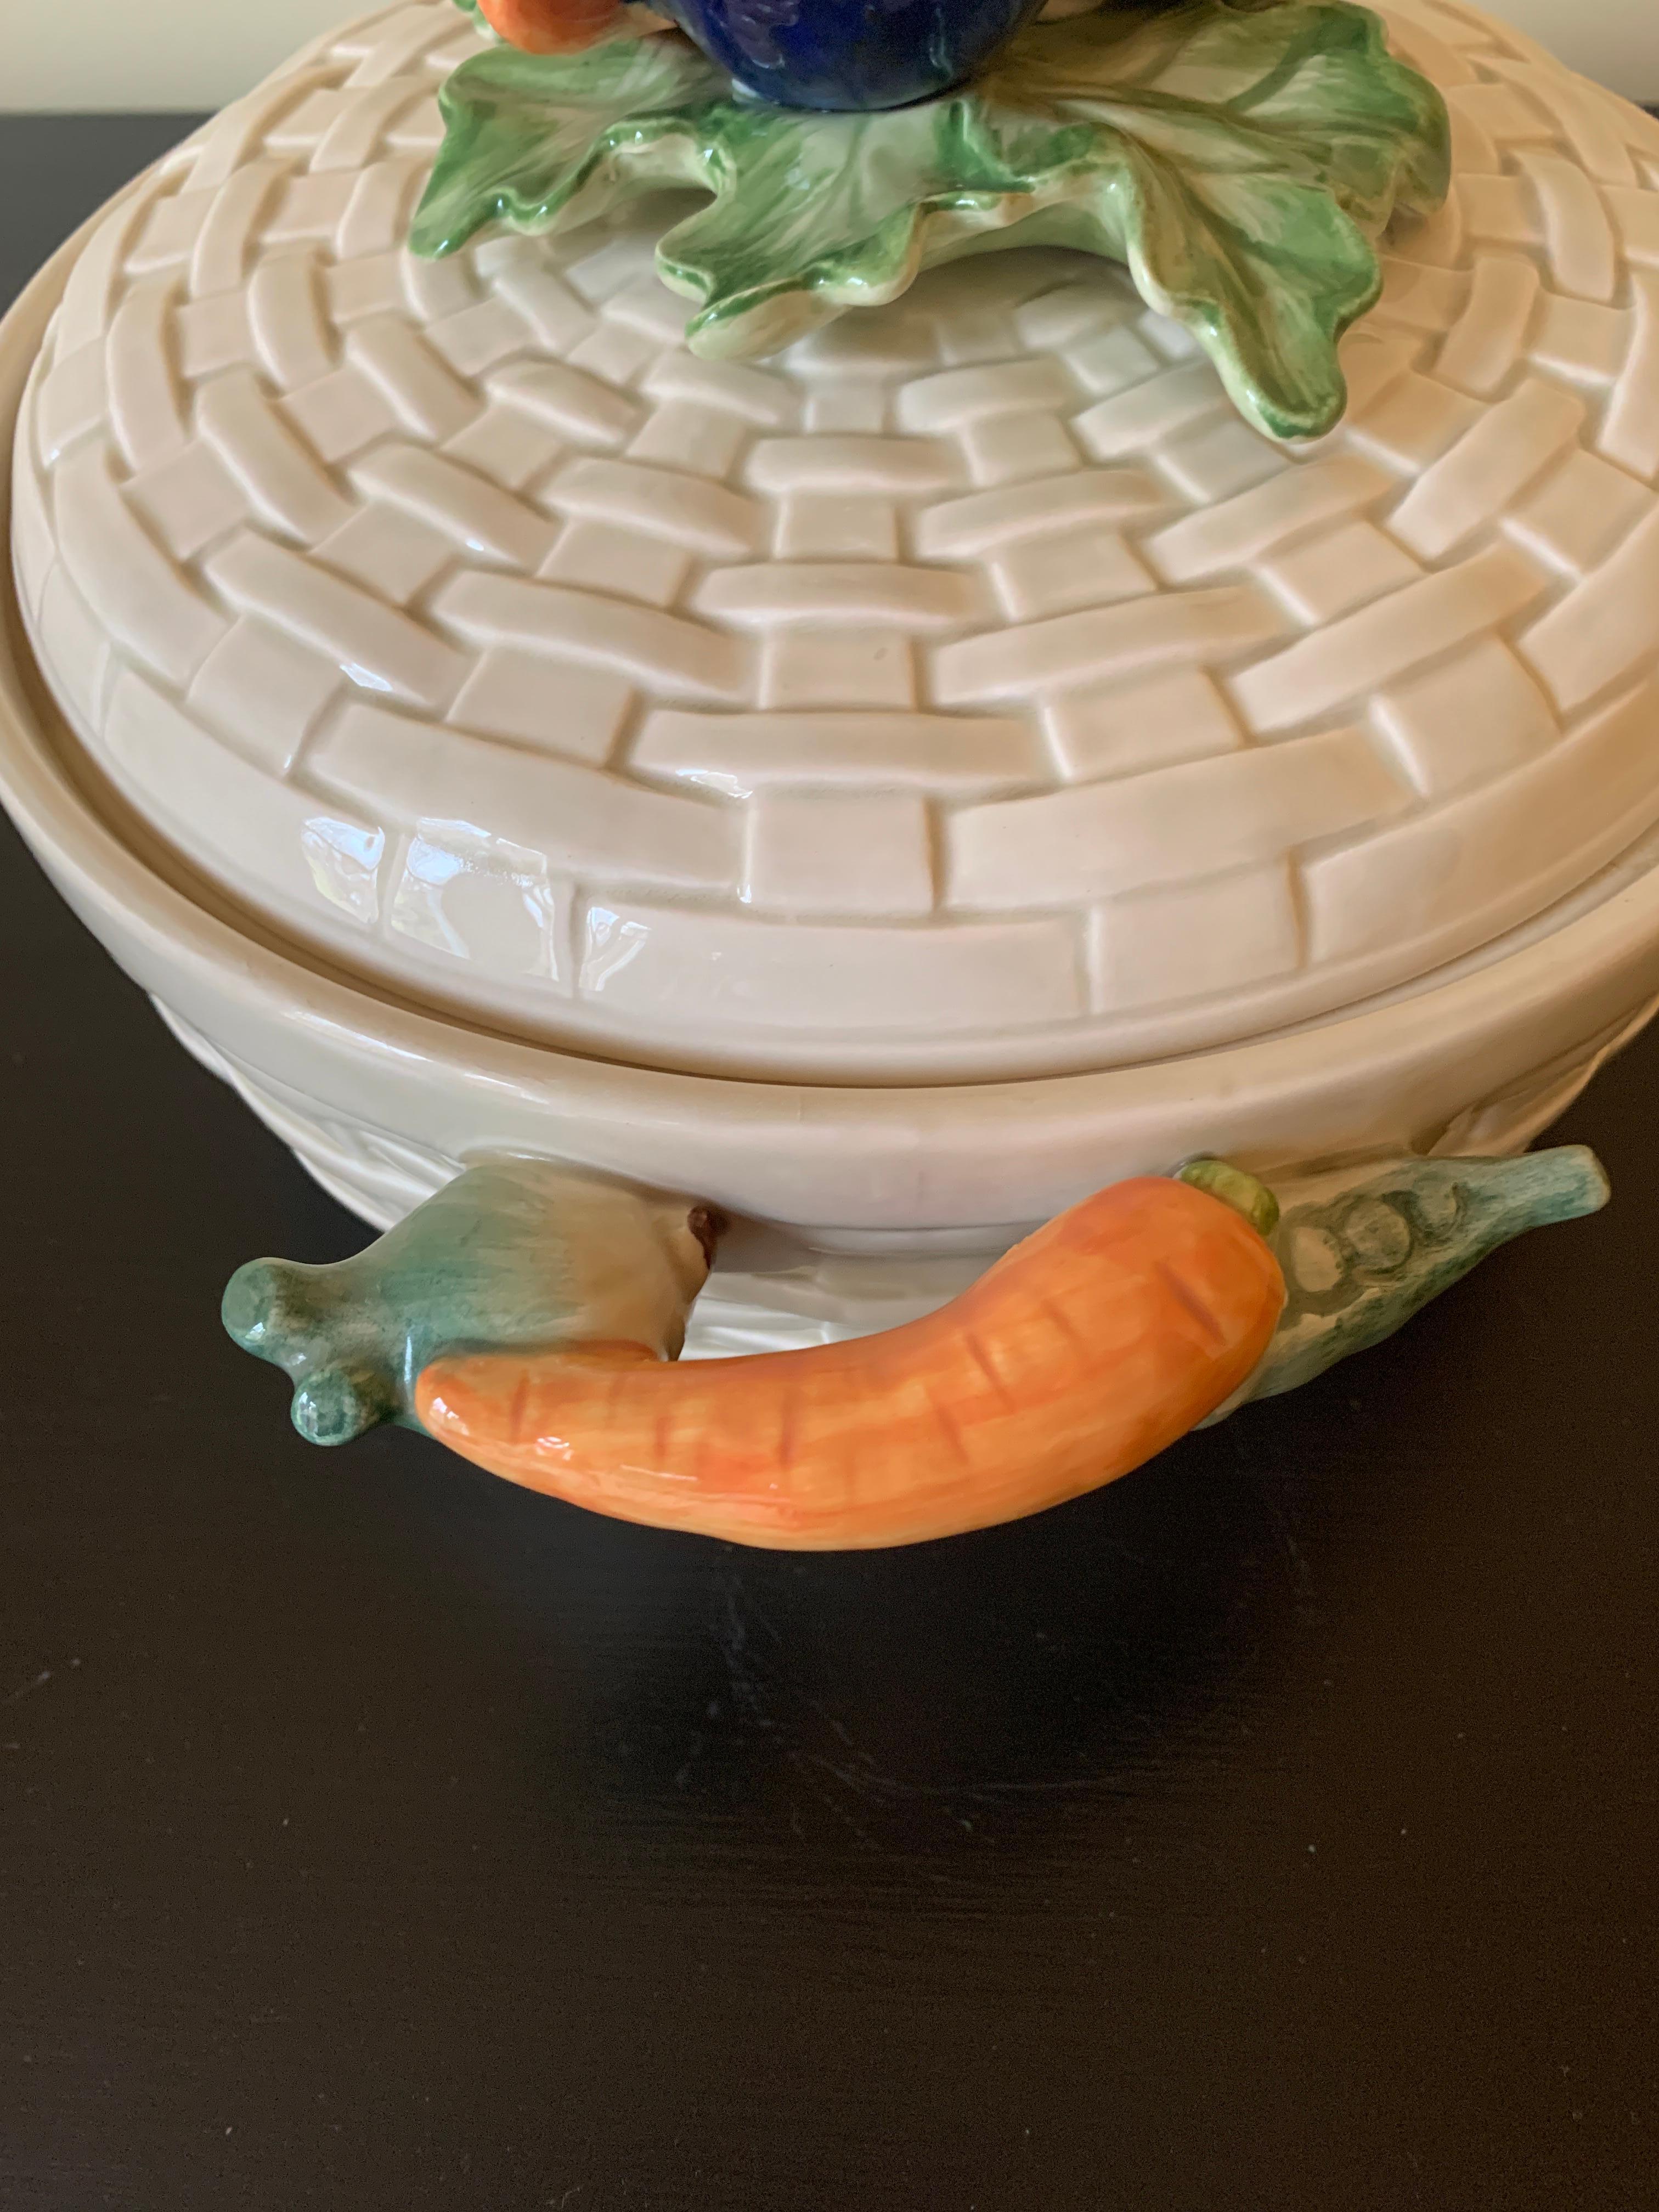 Fitz & Floyd Glazed Ceramic Trompe l'Oeil Woven Basket With Vegetables Casserole For Sale 3